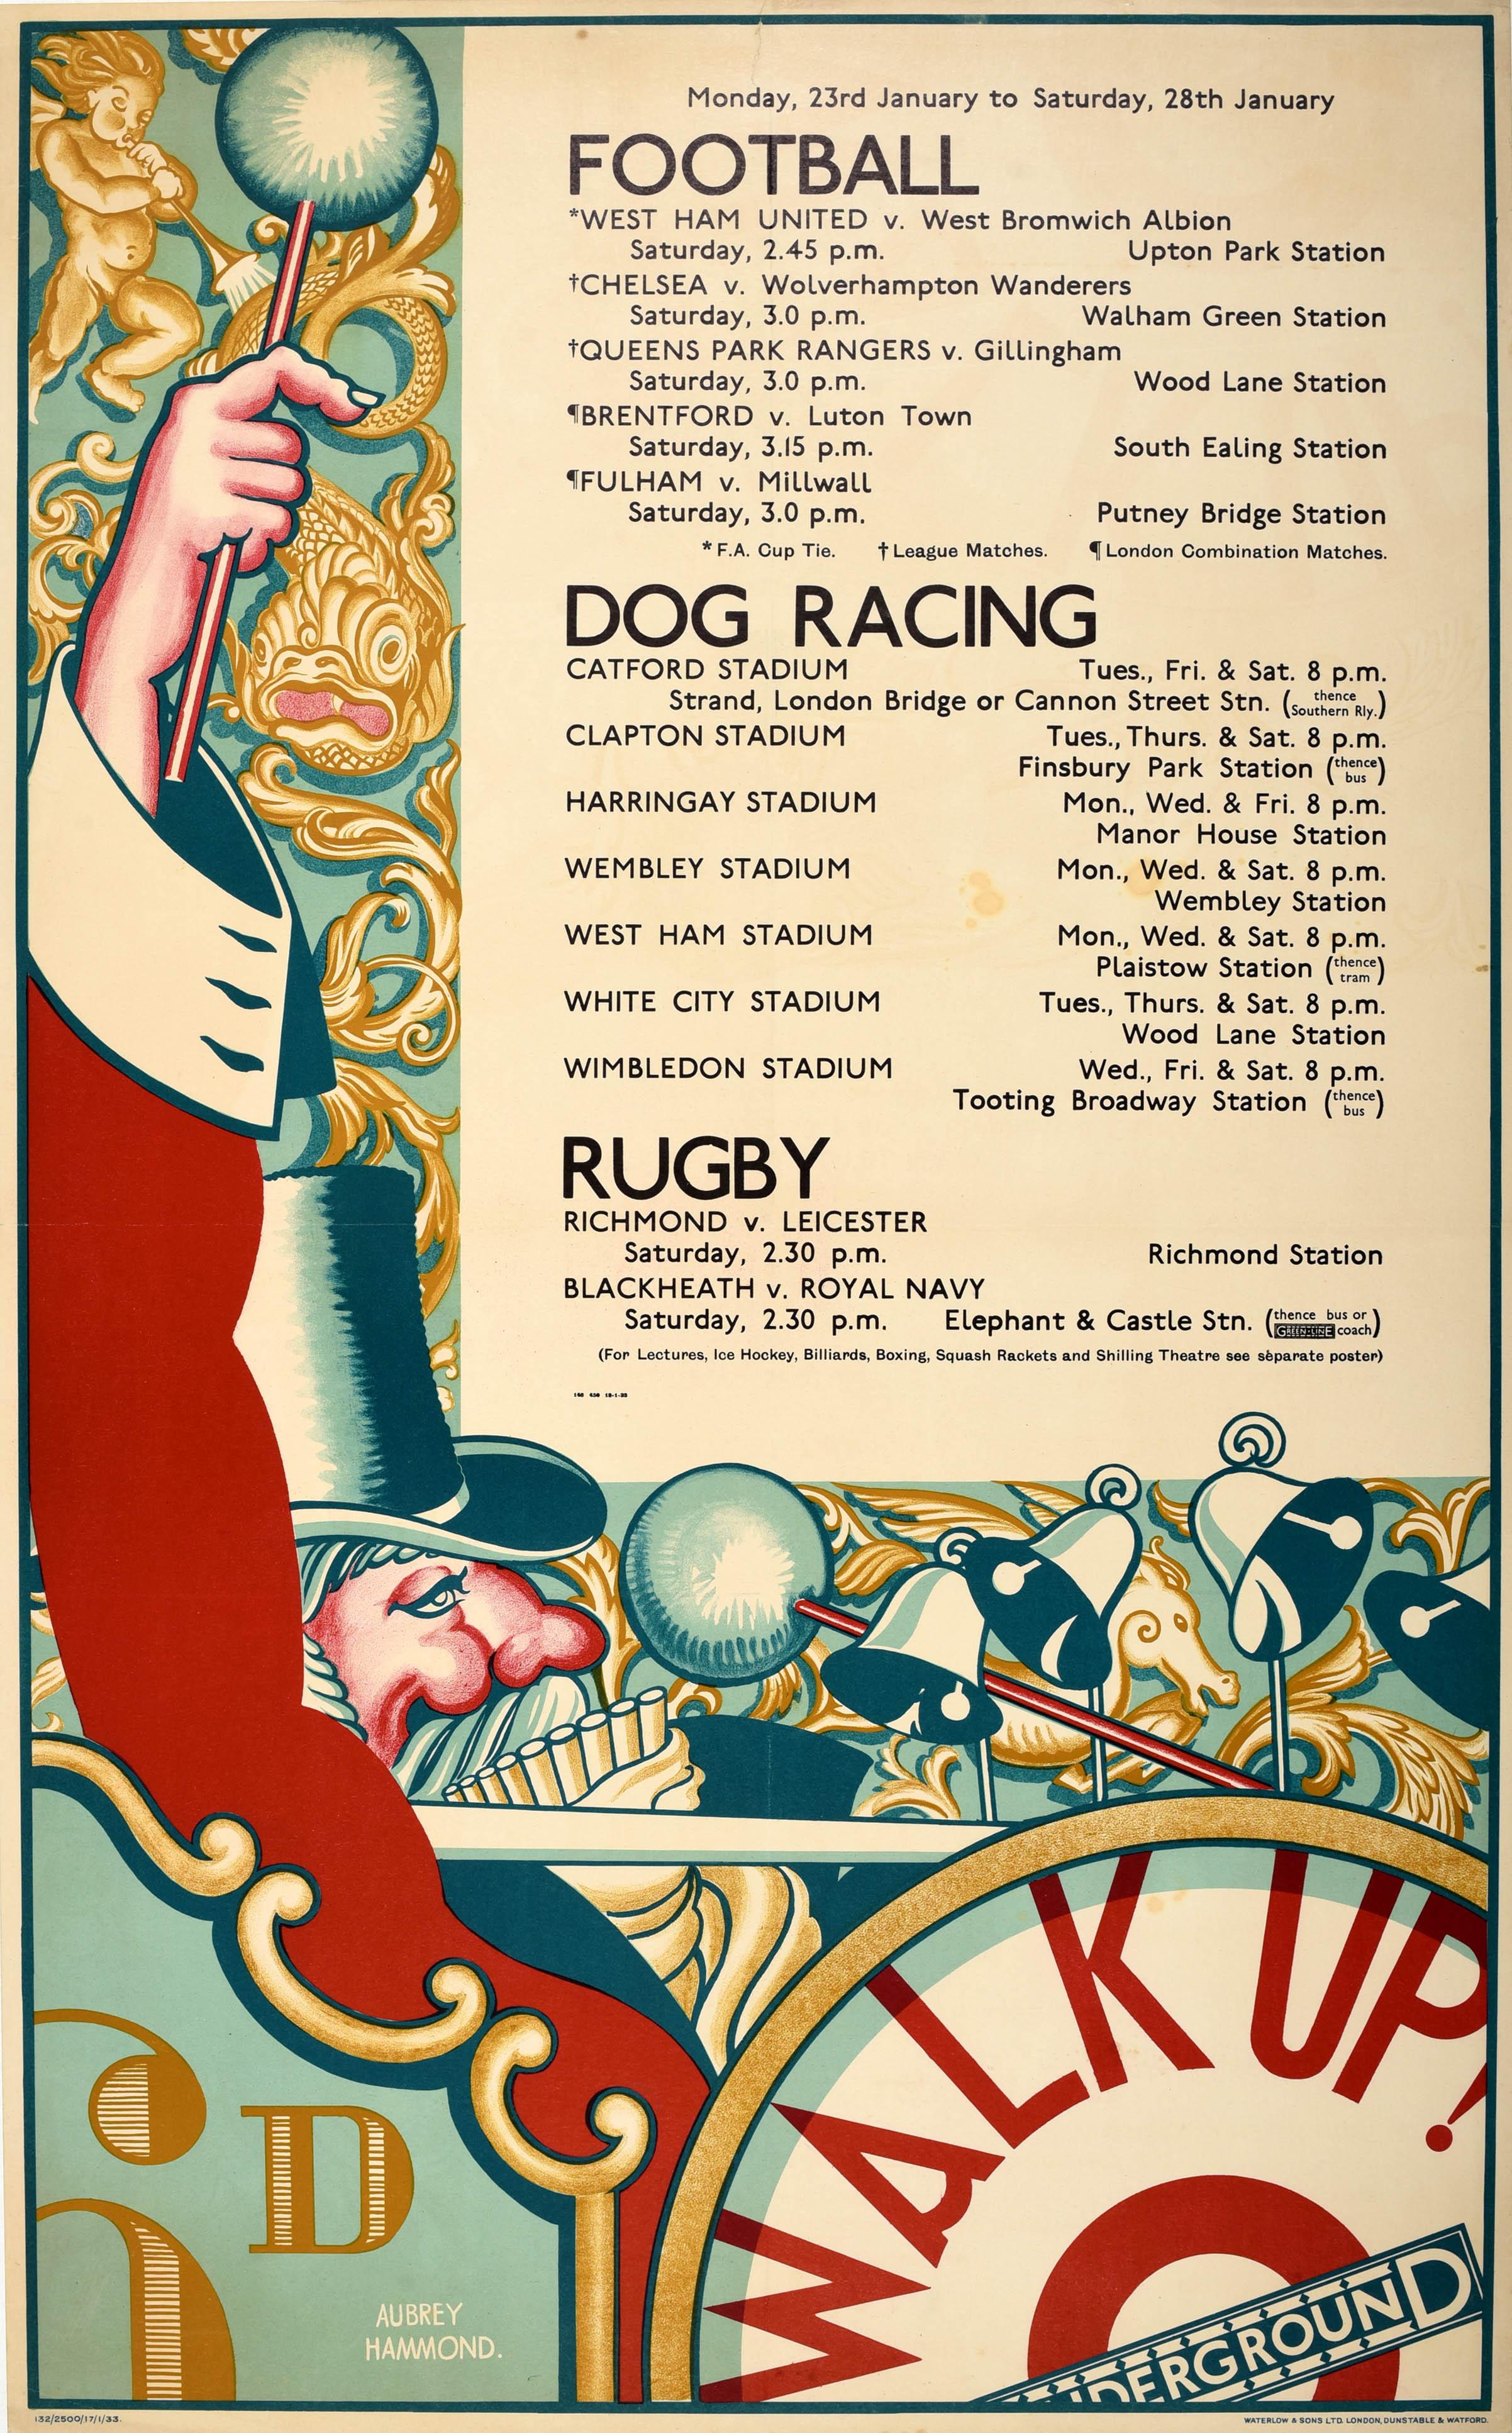 Aubrey Hammond Print - Original Vintage London Underground Poster Football Dog Racing Rugby Sports Week